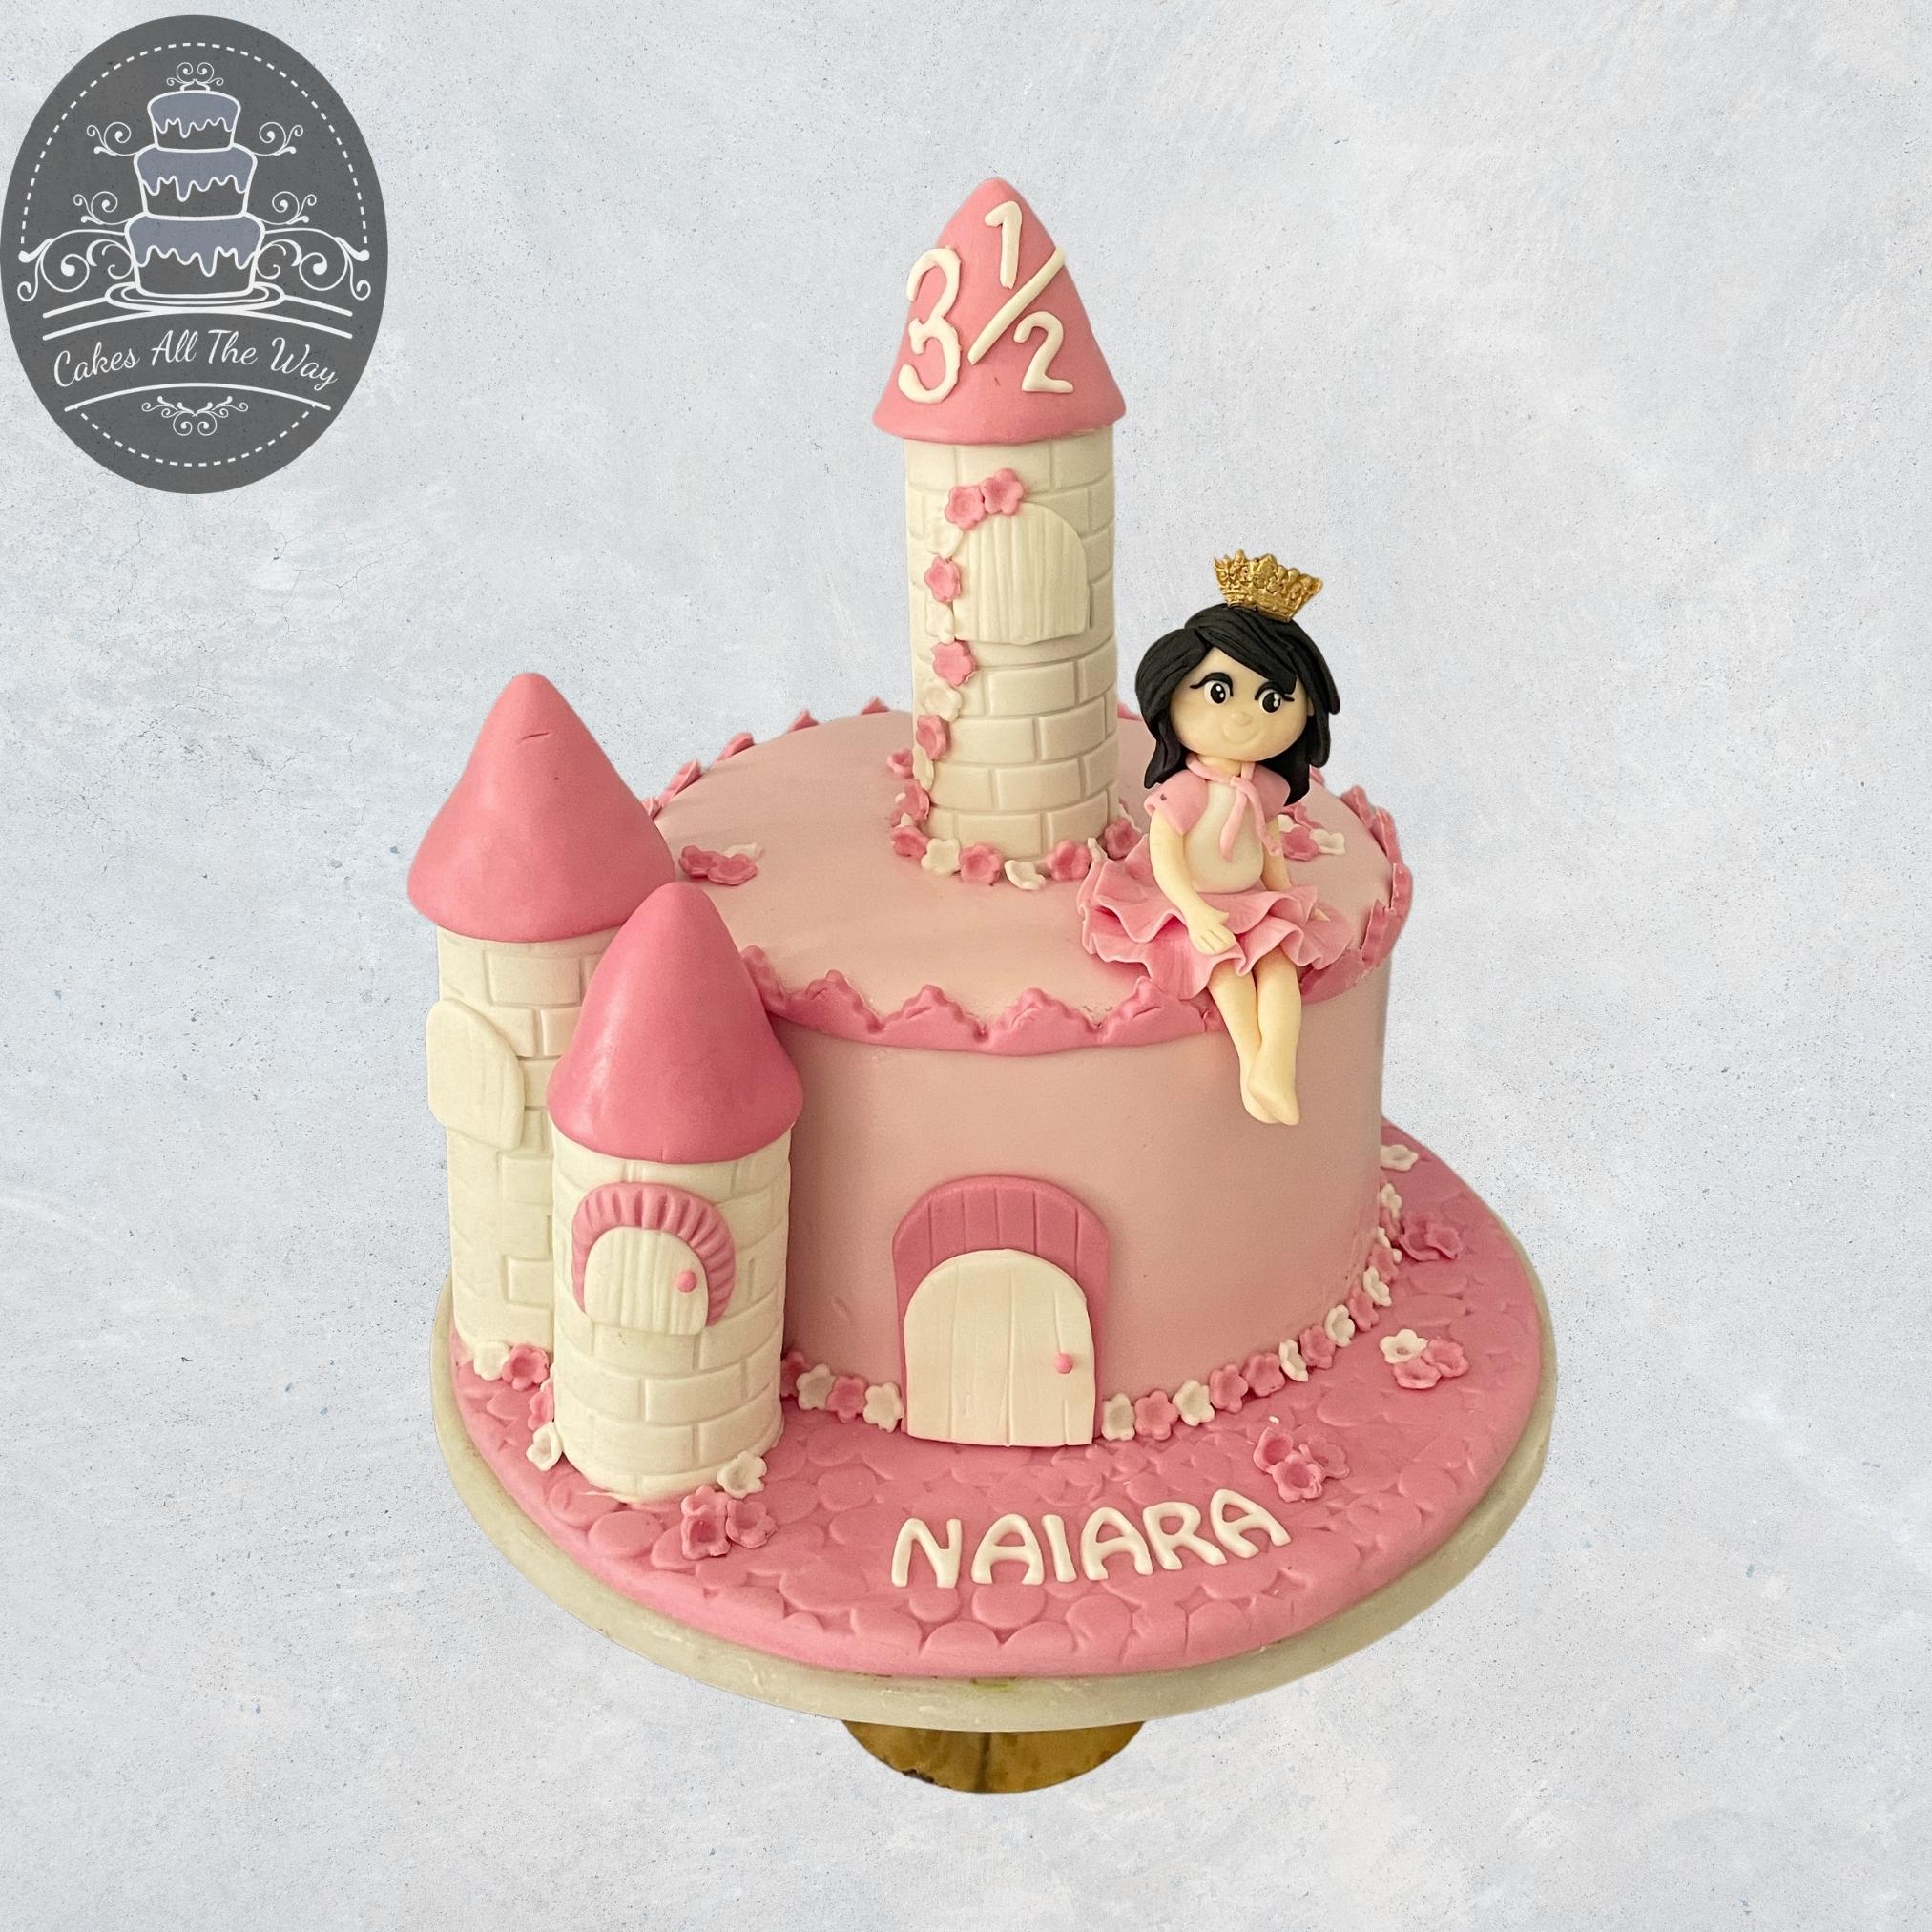 Personalised birthday cakes with her favorite Disney princess